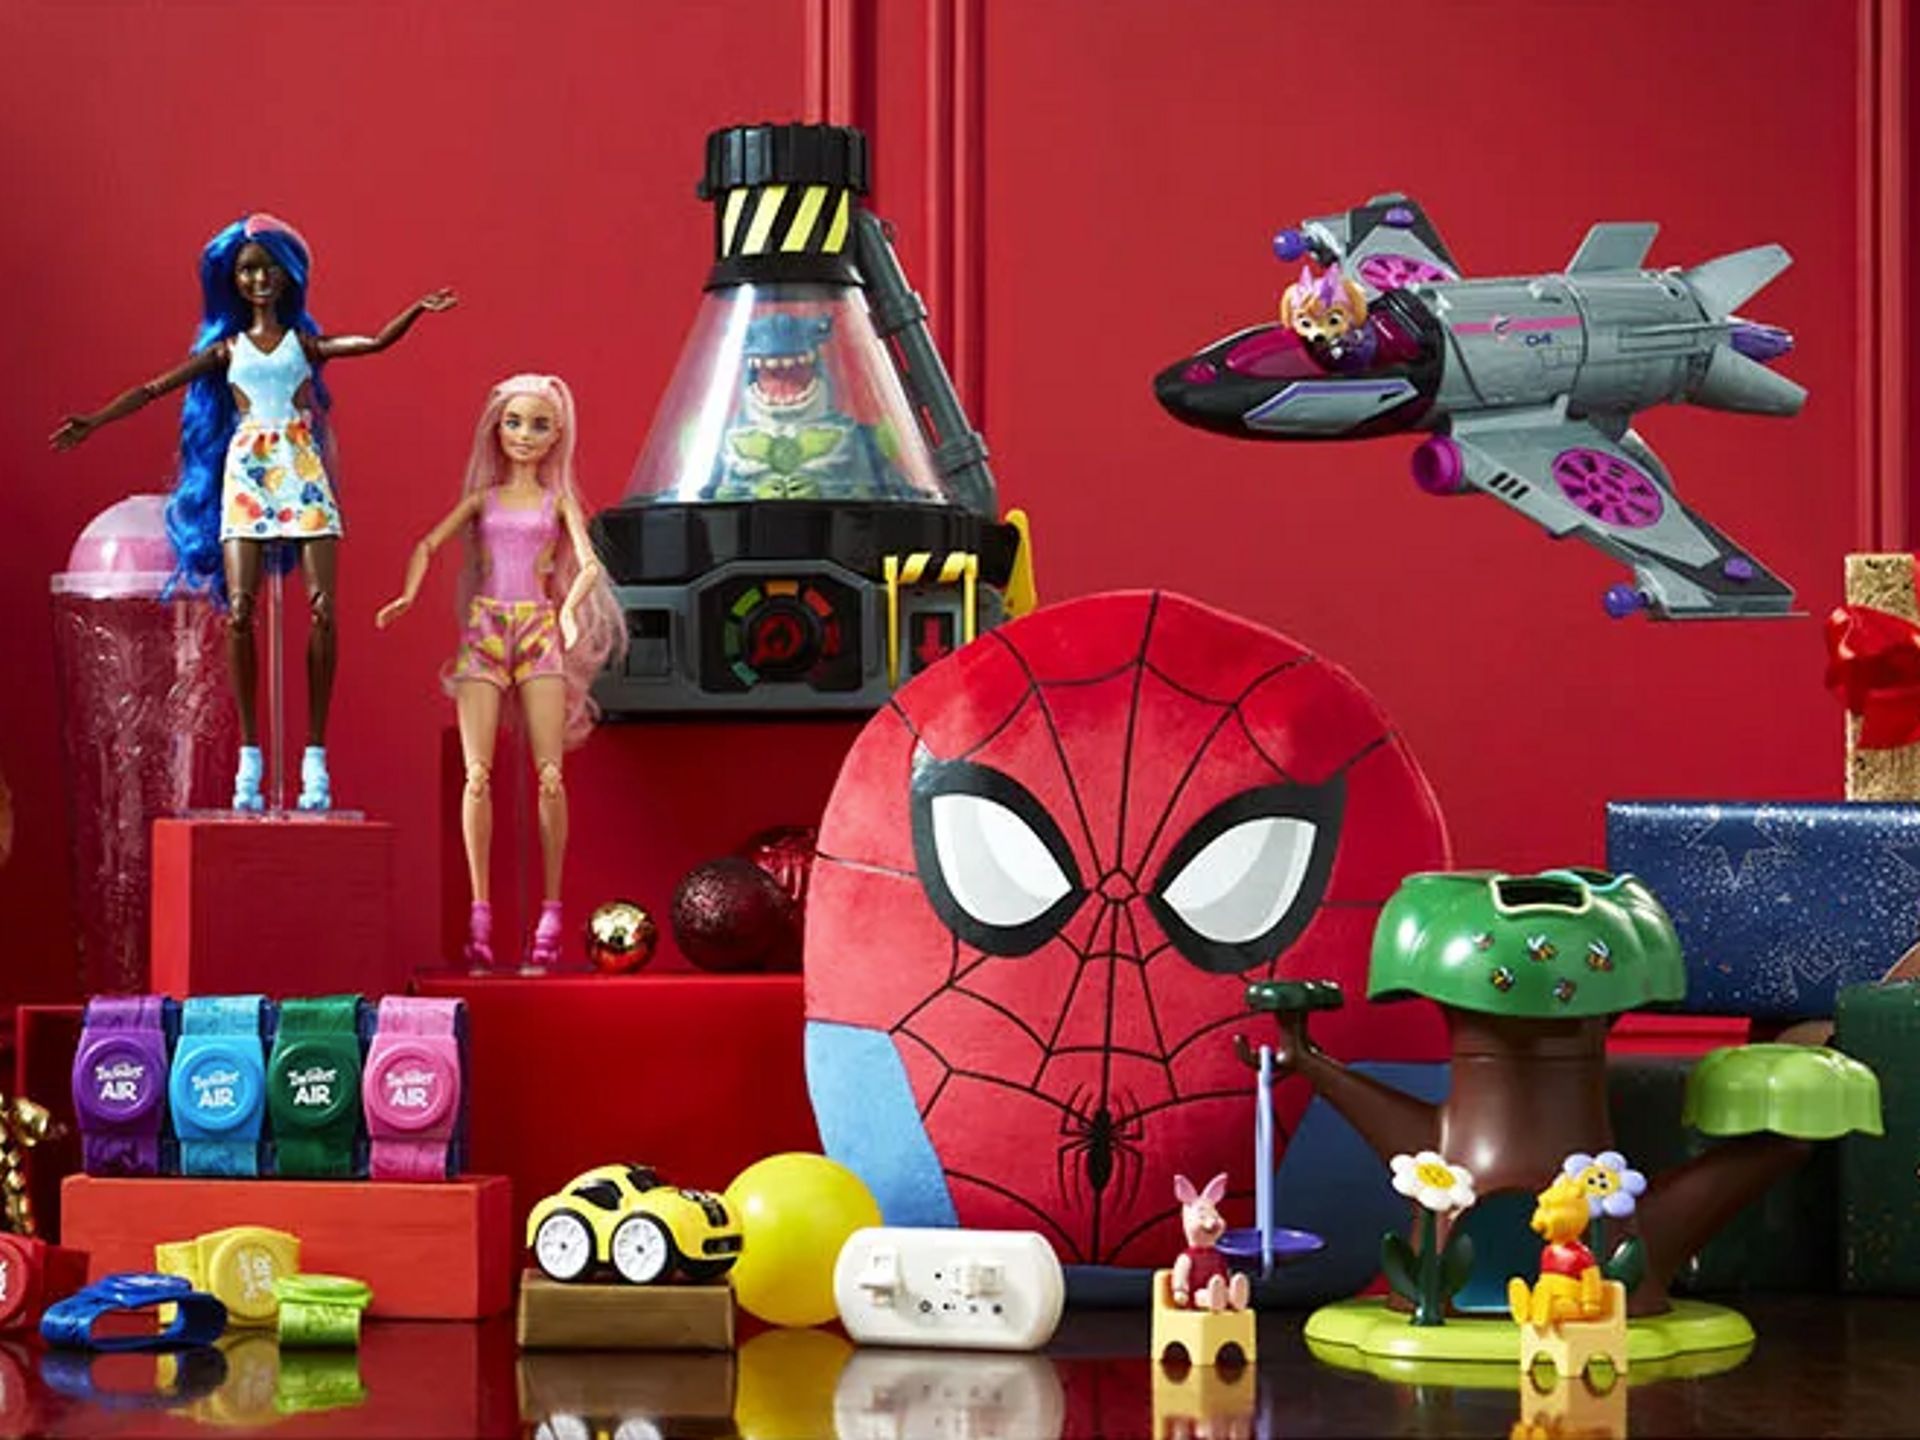 Parents Best Toys 2023 Awards: Meet the Winners